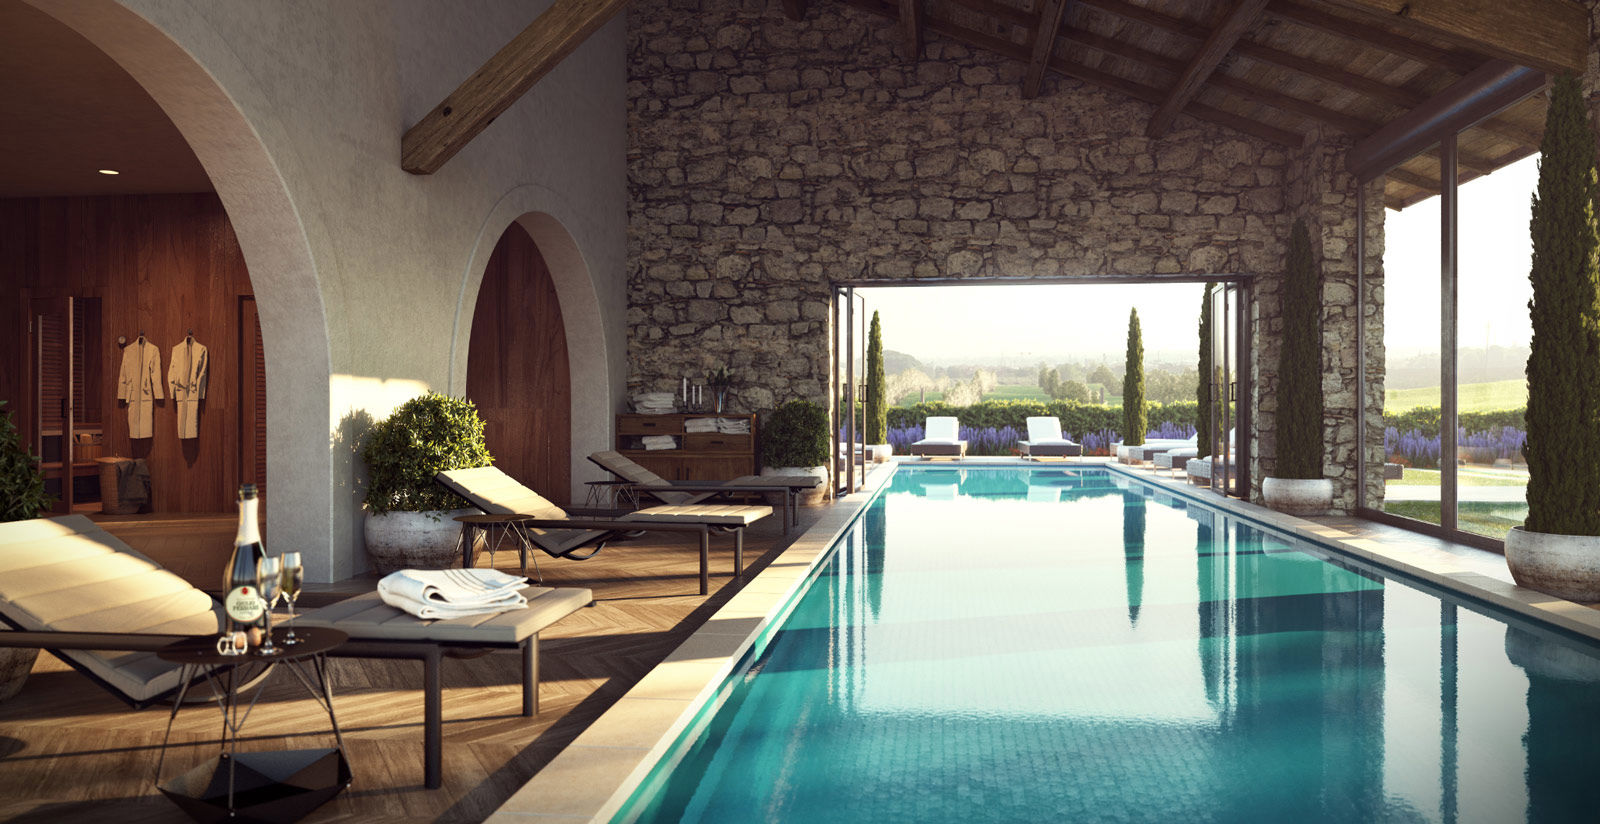 Hotel with indoor pool in Veneto Italy 4